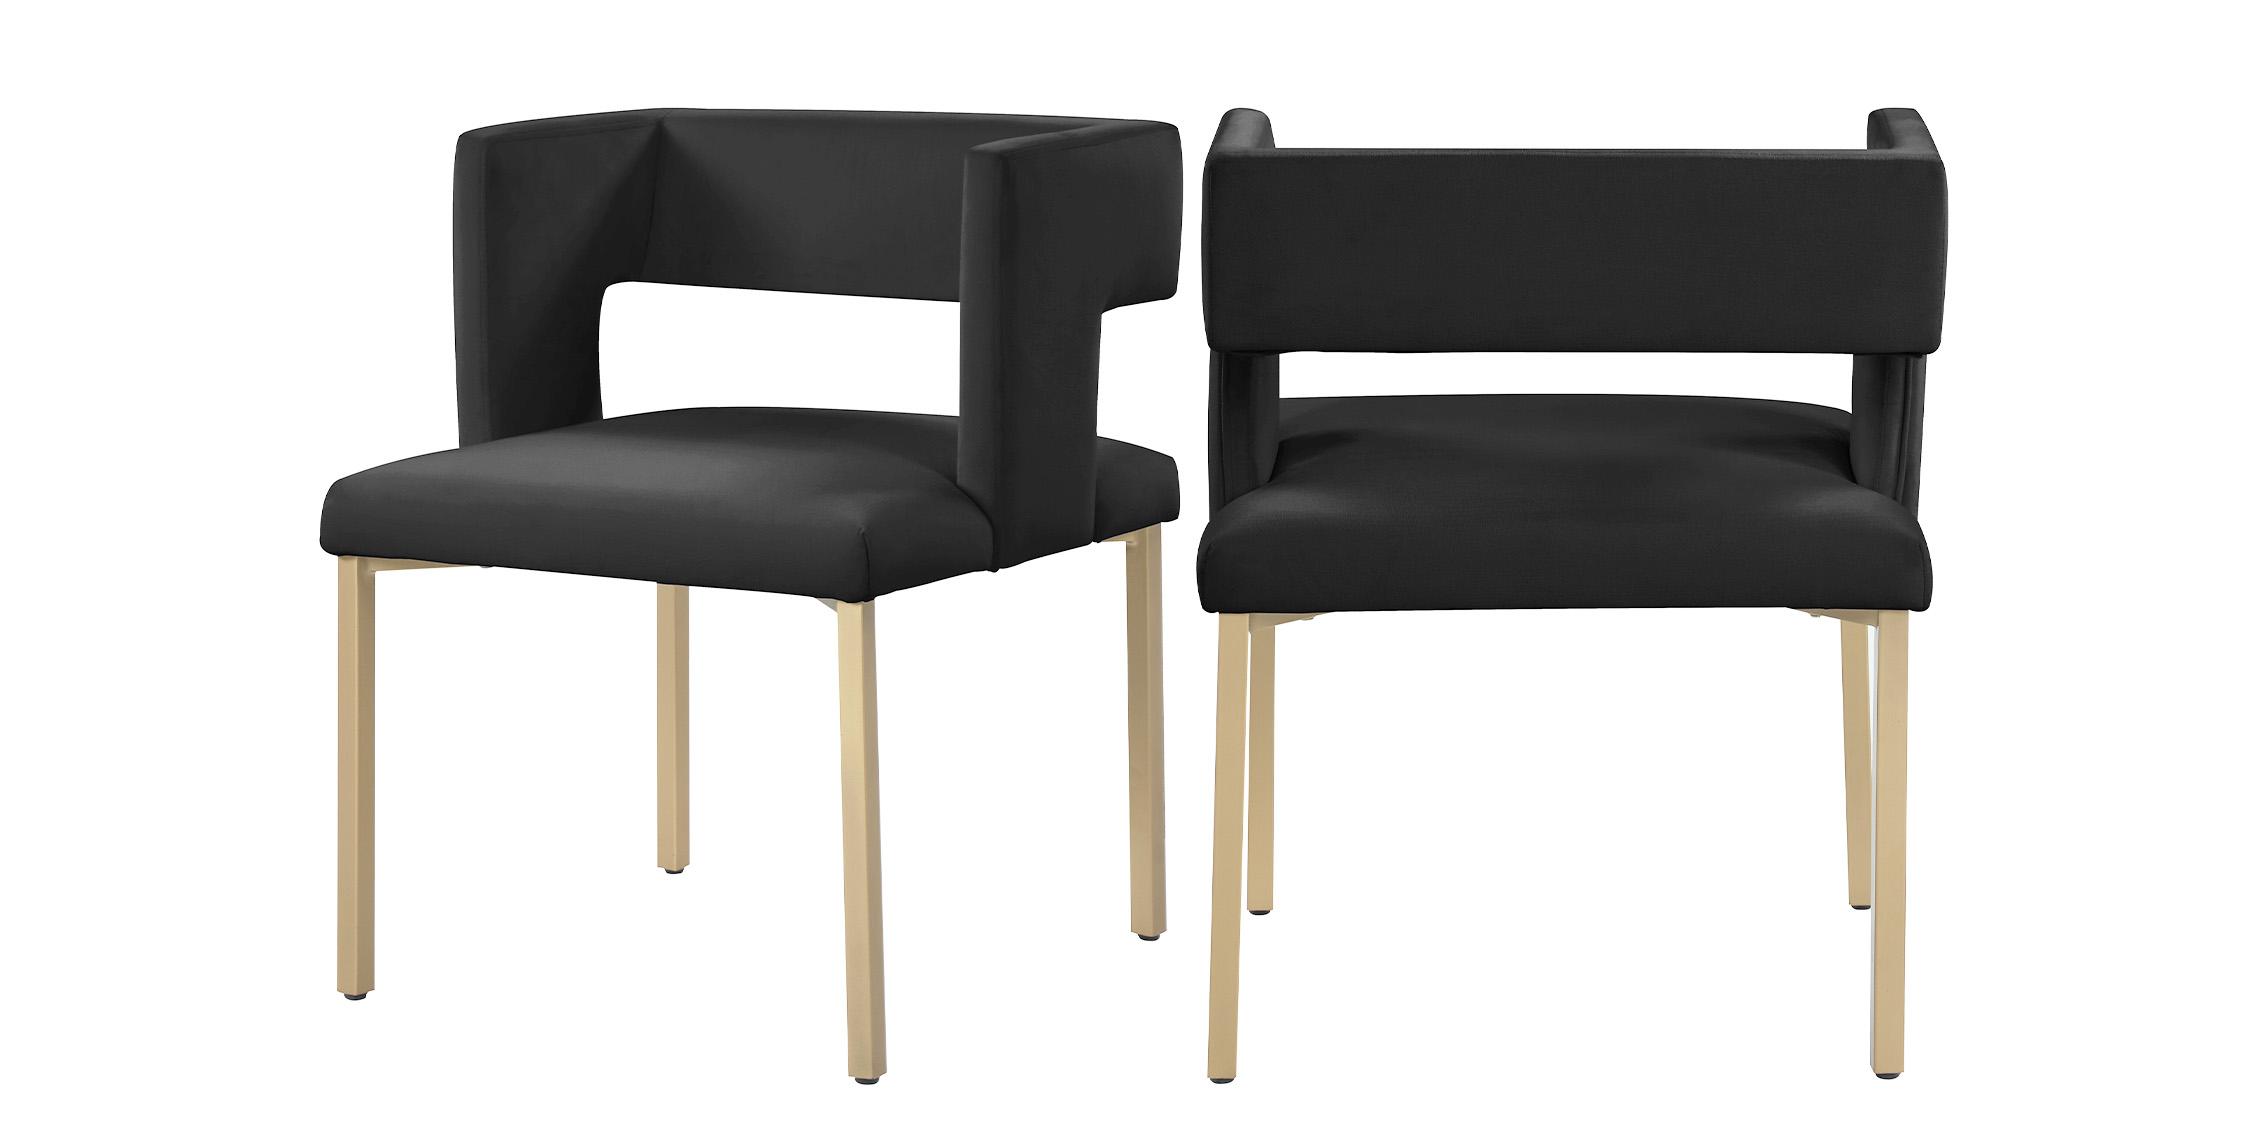 Contemporary, Modern Dining Chair Set CALEB 967Black-C 967Black-C in Gold, Black Velvet